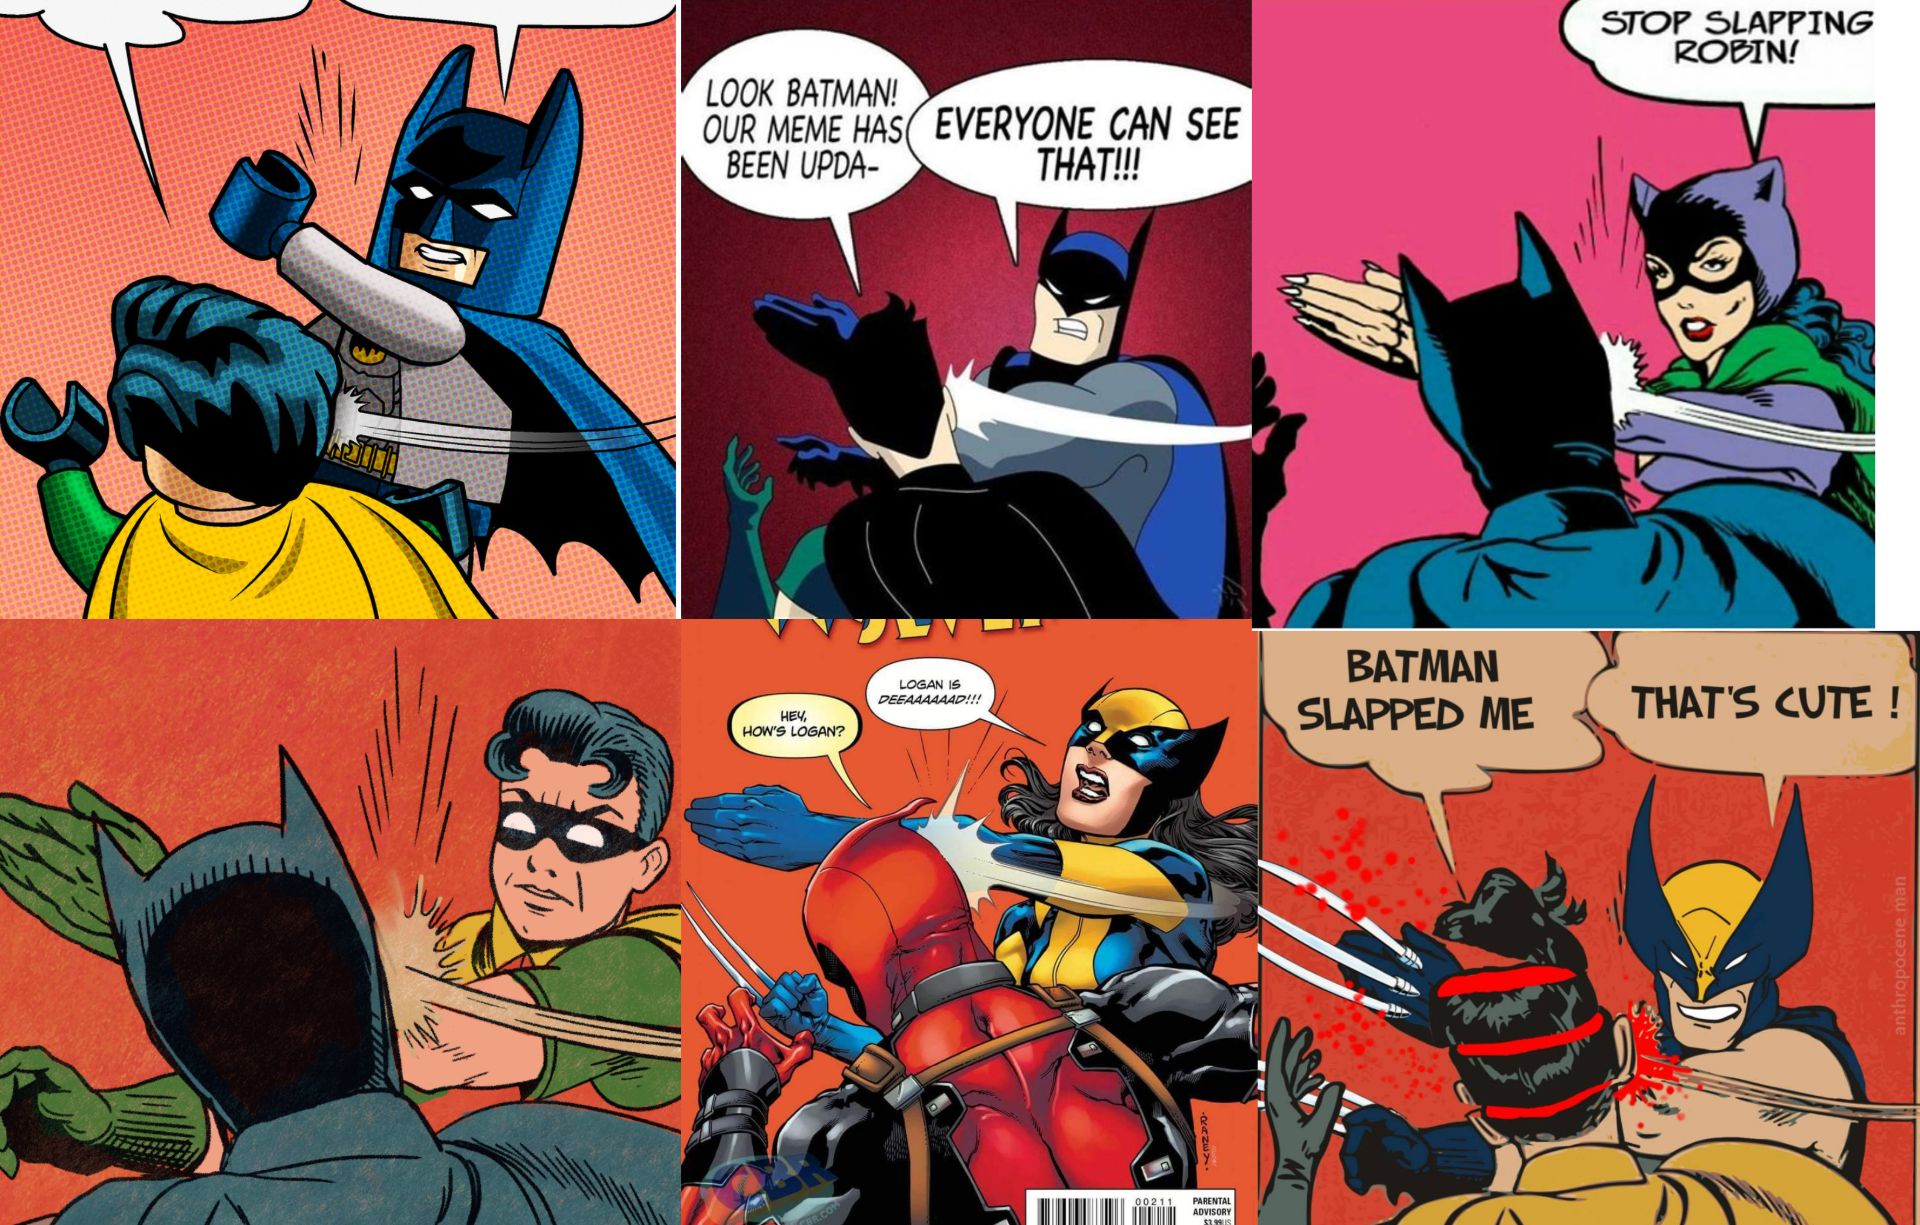 Why Did Batman Actually SLAP Robin, Anyway? 